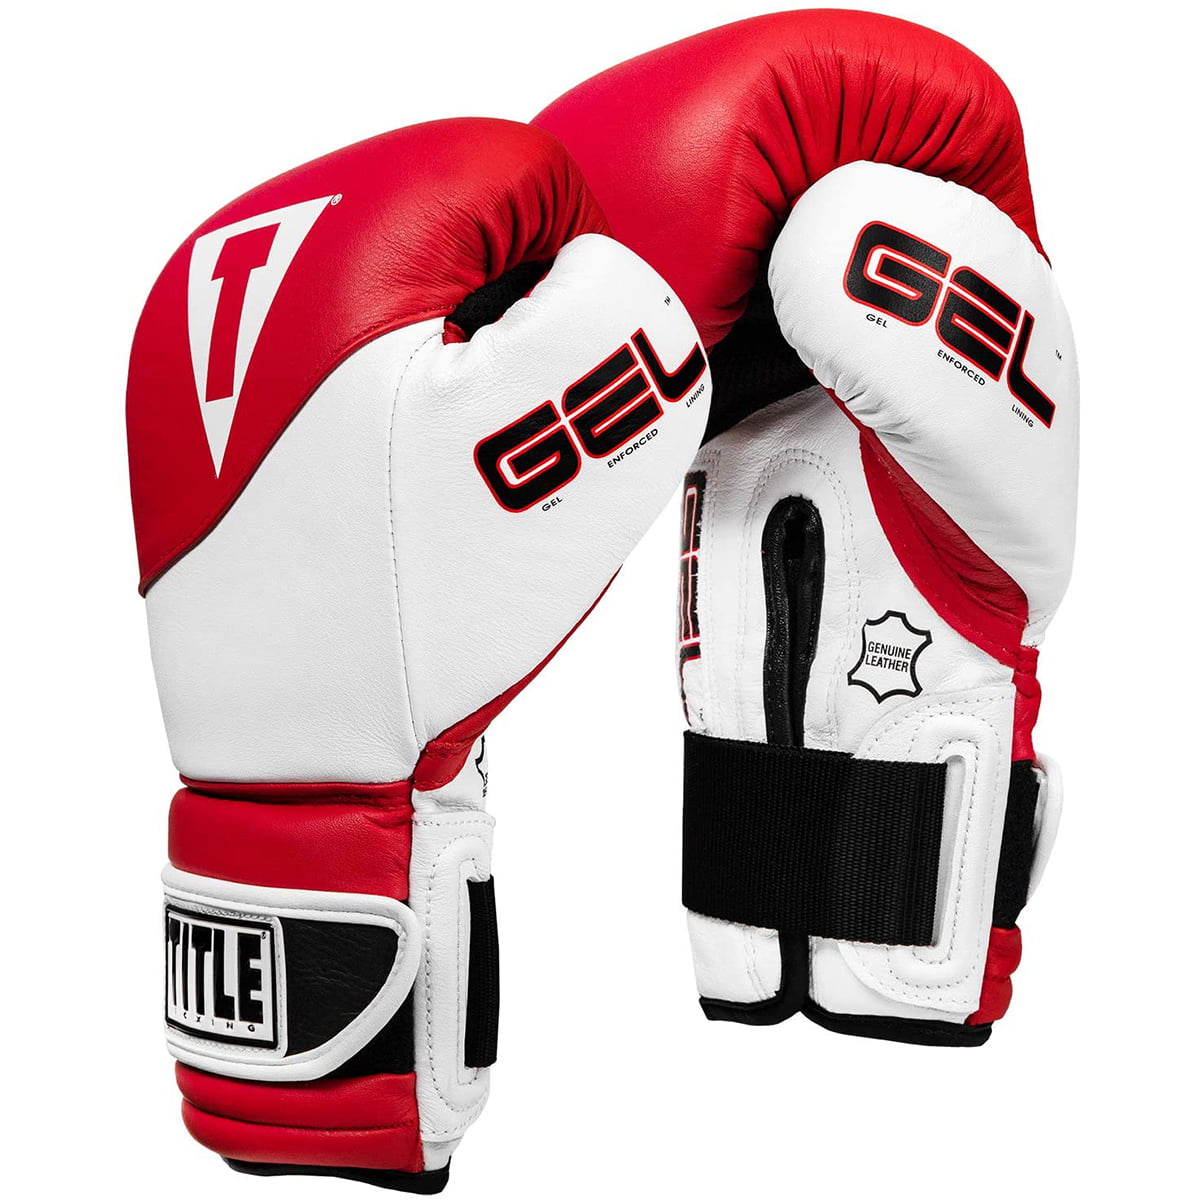 Tactic boxing. Боксерские перчатки title Gel Suspense. Everlast перчатки красно белые.. Перчатки 18 унций. Перчатки 14 унций.